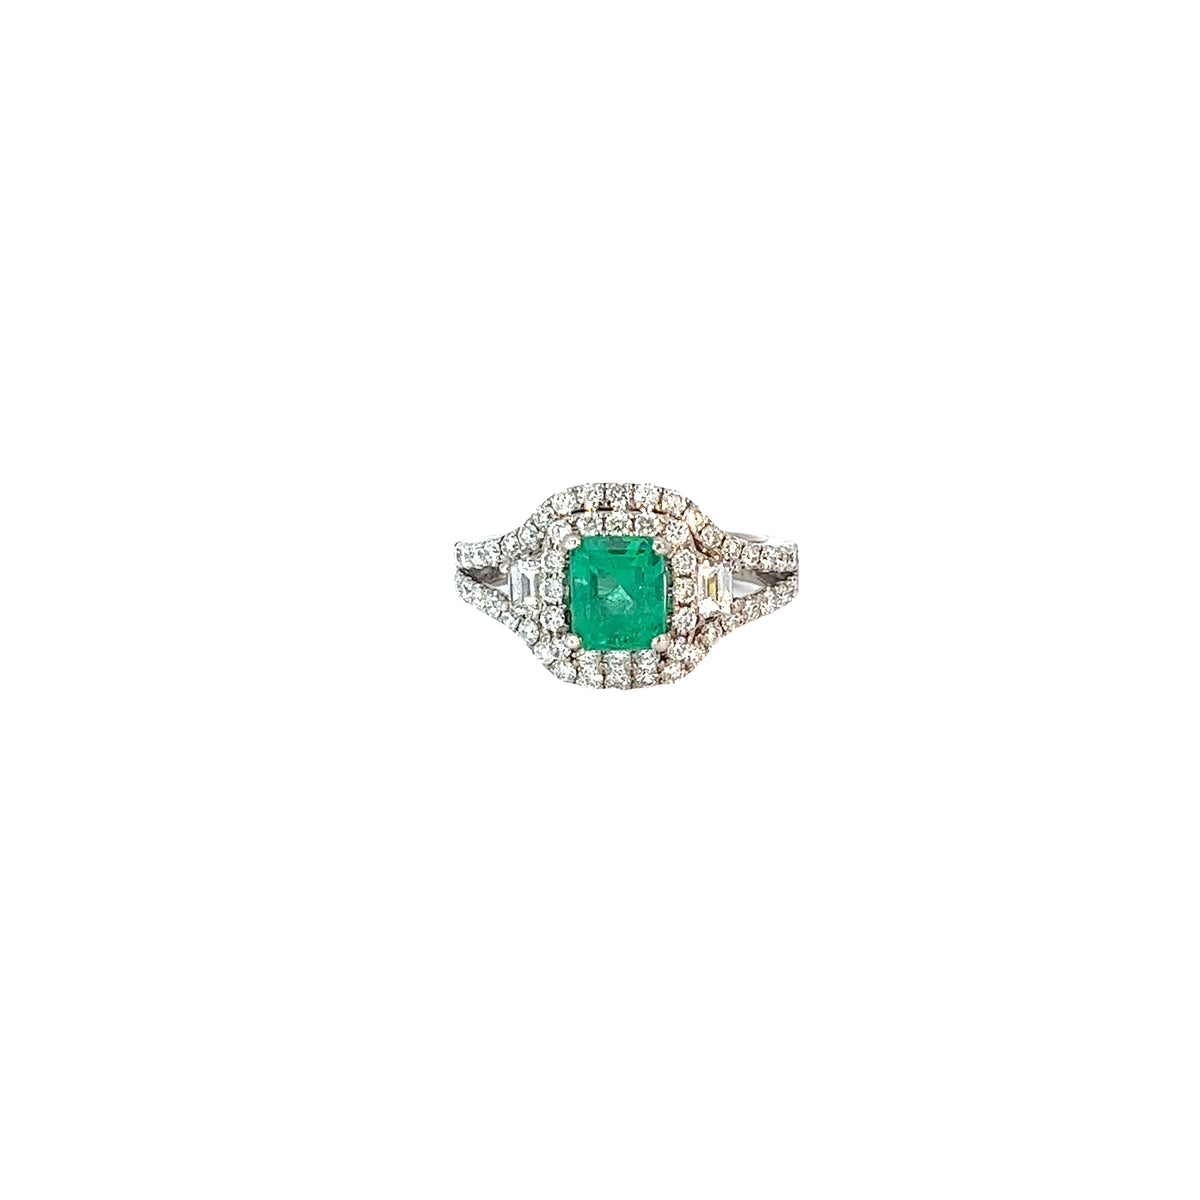 Ladies 18k White Gold Diamond and Emerald Ring